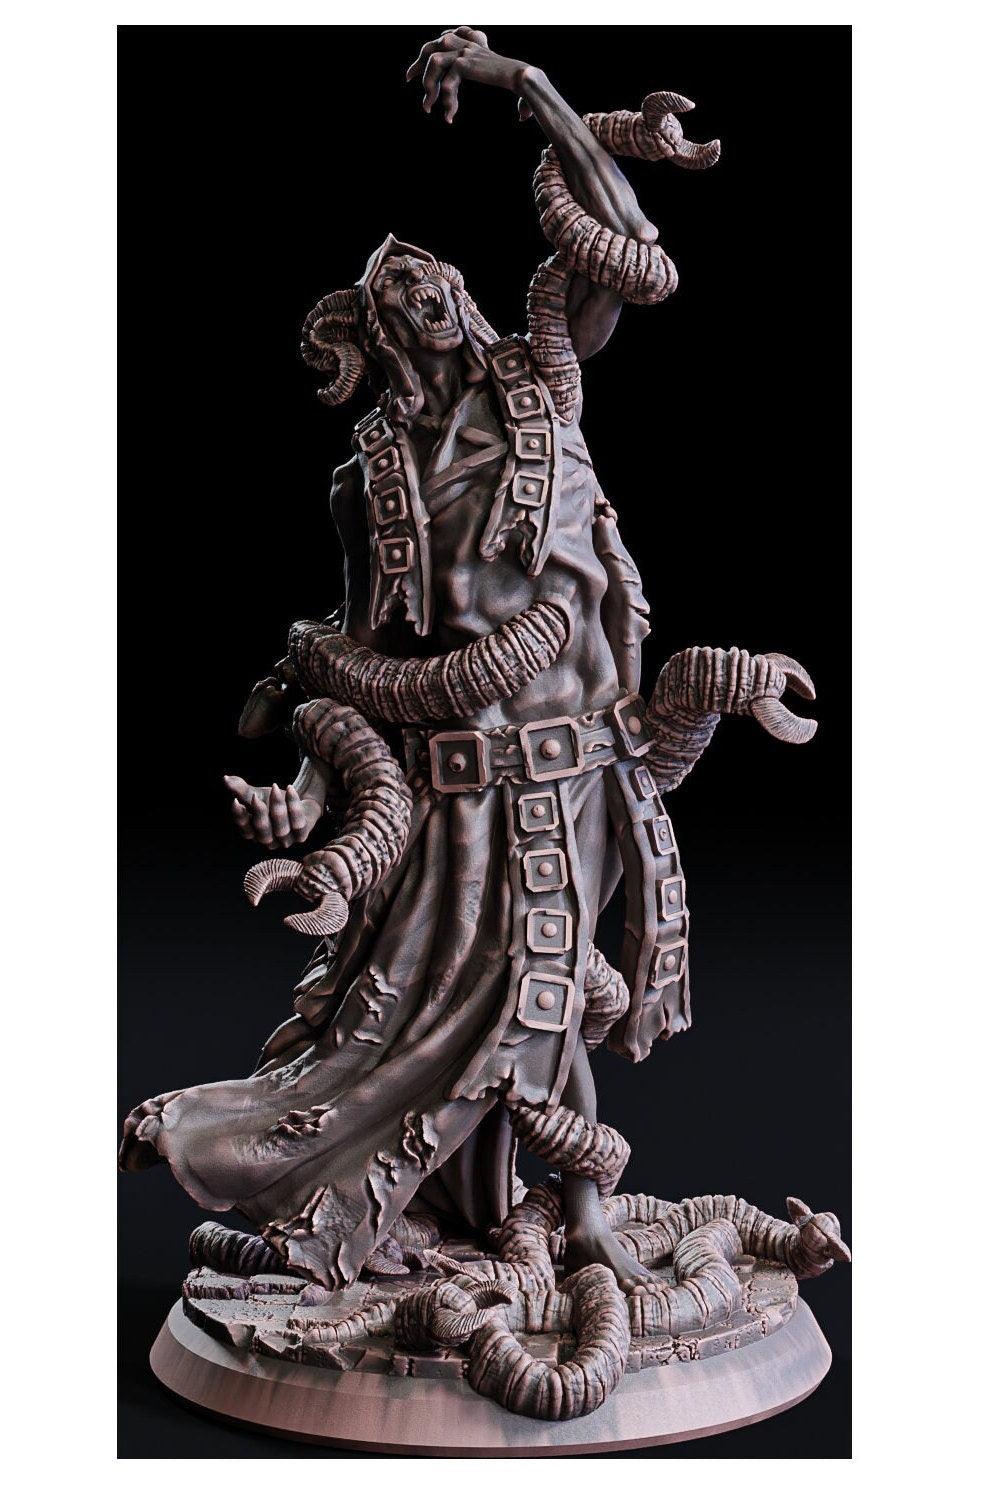 Lord of Despair Miniature | Demonic Sculpture for DnD Adventures | 32mm Scale - Plague Miniatures shop for DnD Miniatures